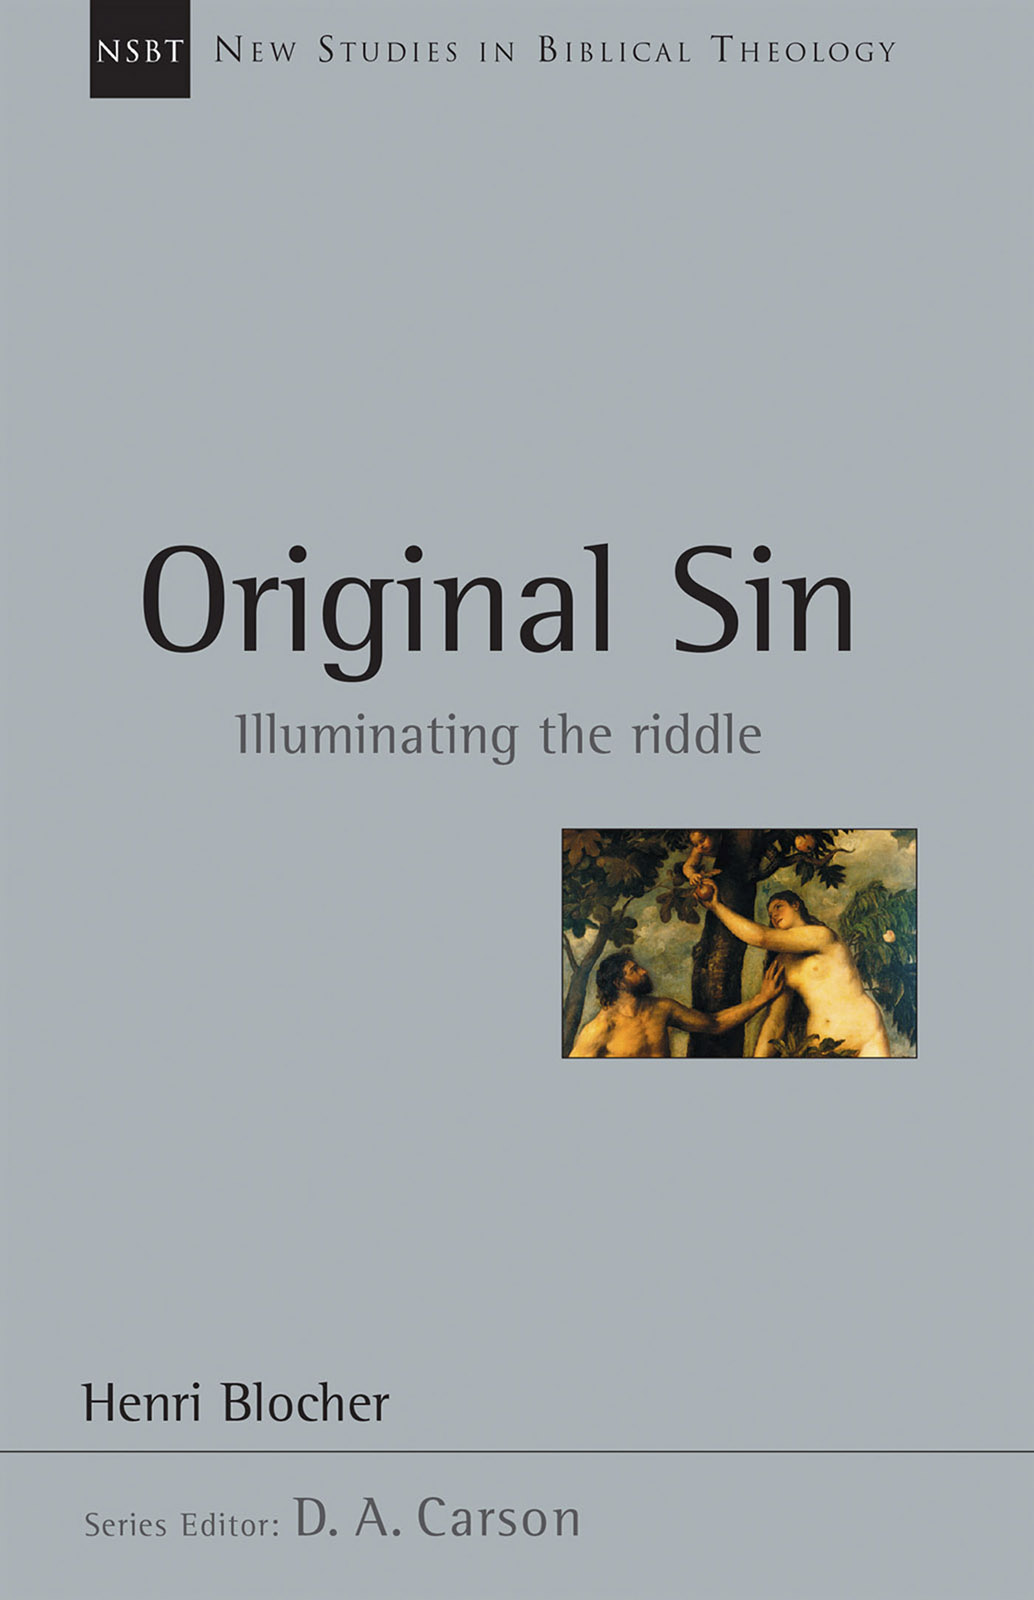 Original sin: Illuminating the Riddle